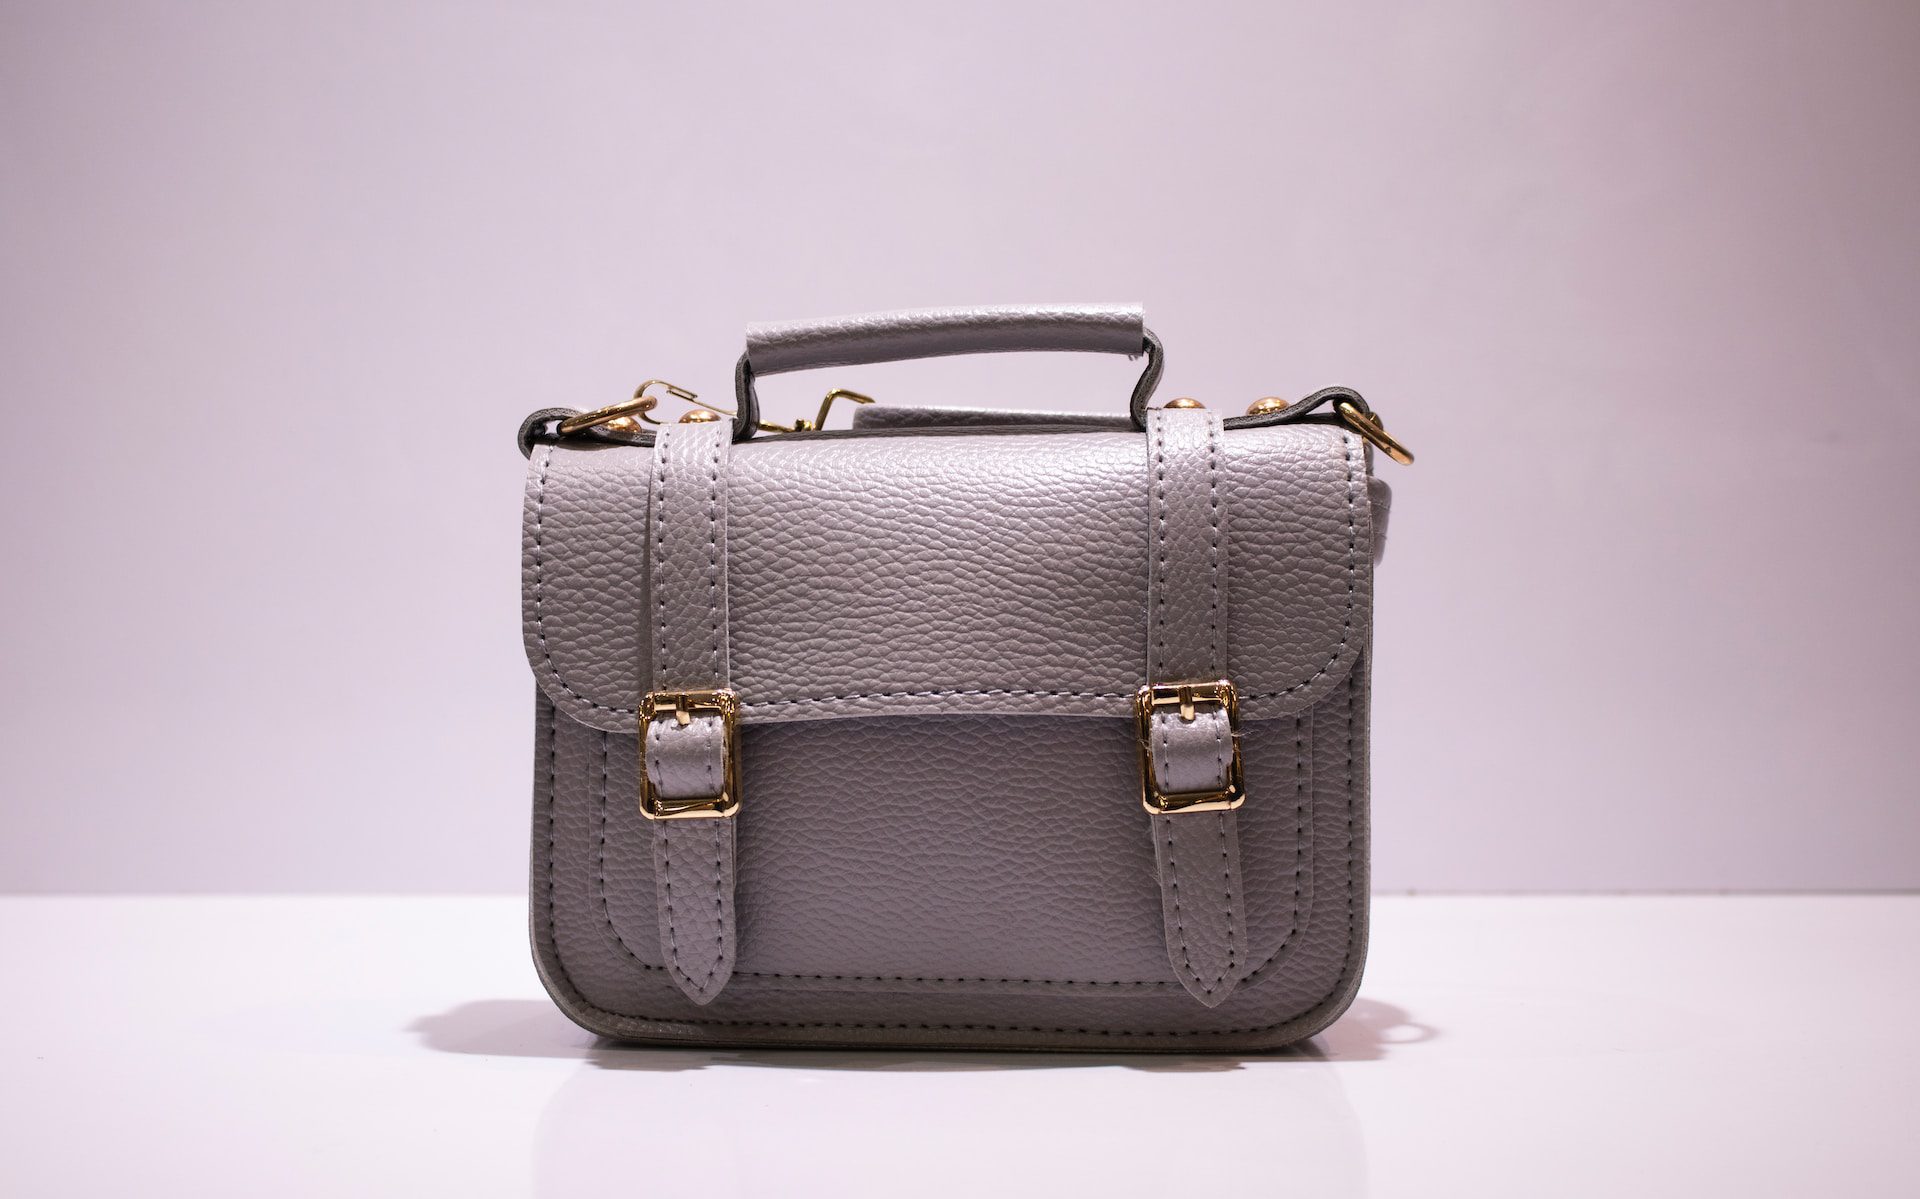 Three Under-the-Radar Luxury Handbag Brands You Should Know About